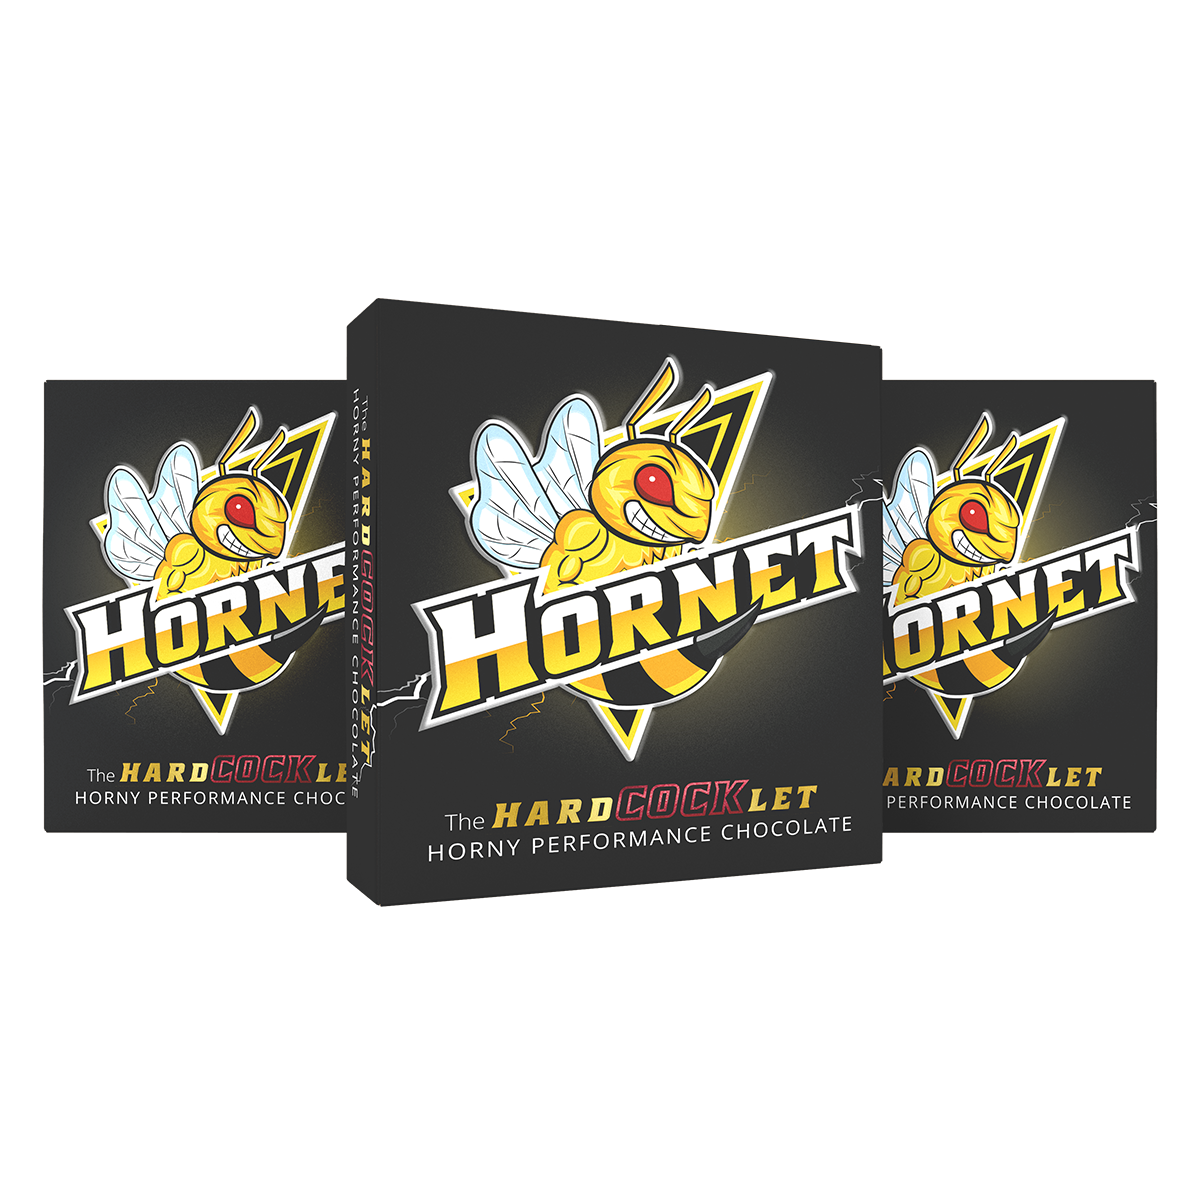 Hornet 3x24g Dark Chocolate